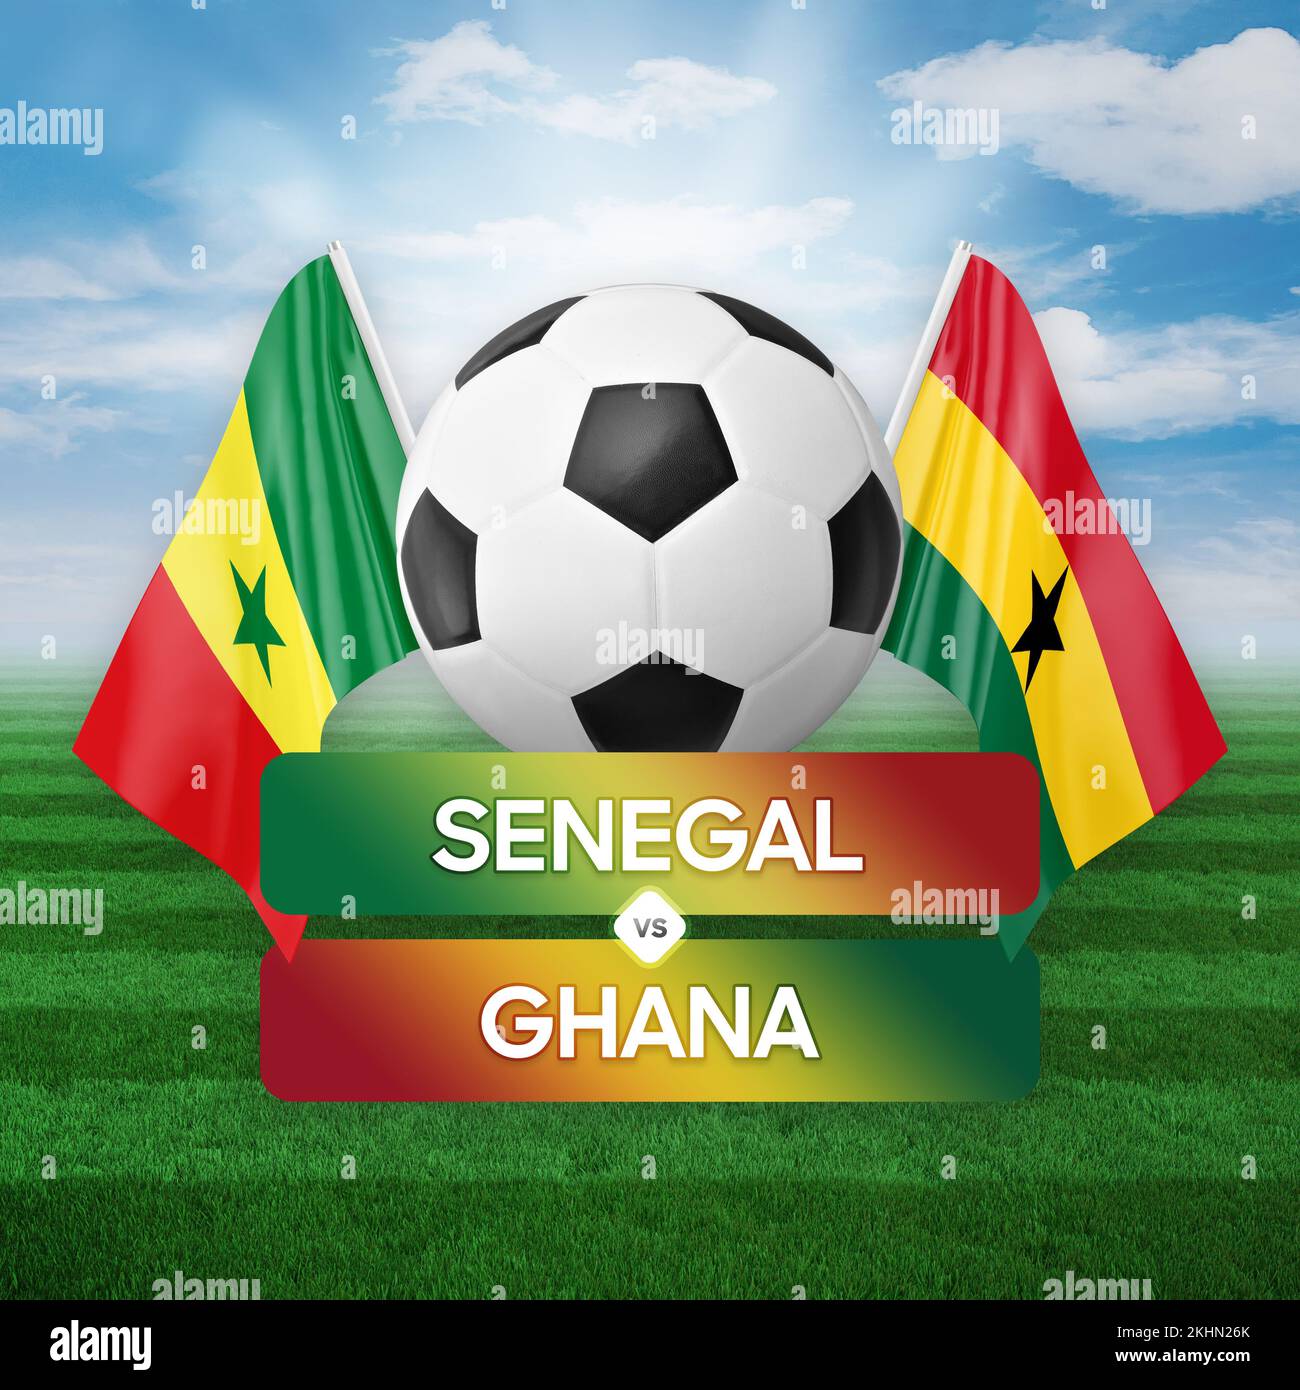 Senegal vs Ghana national teams soccer football match competition concept. Stock Photo